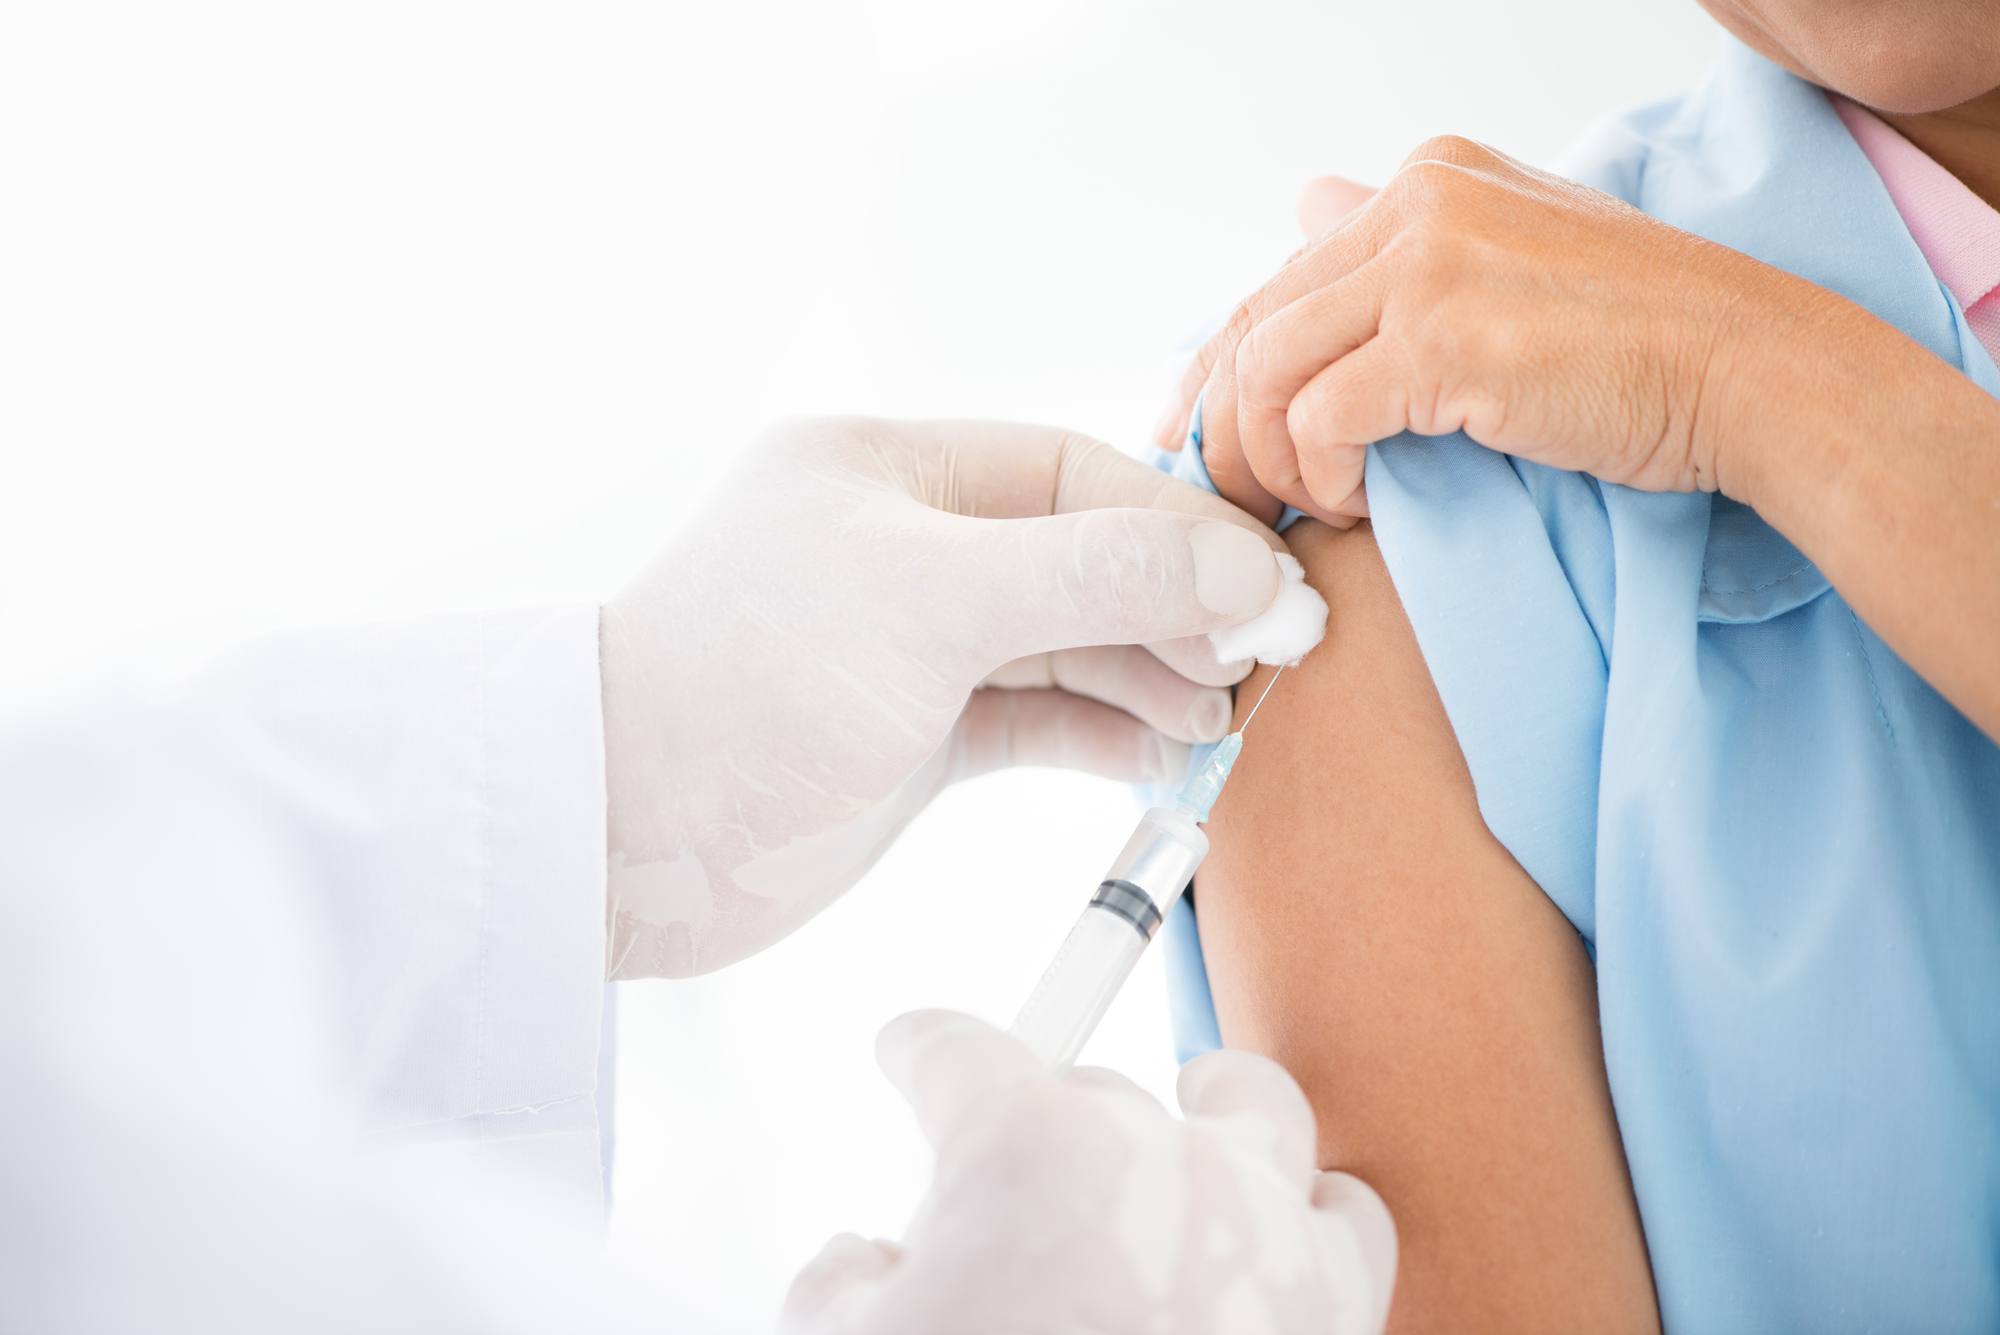 Обязательная вакцинация COVID-19: кого и какими темпами прививают в Запорожье